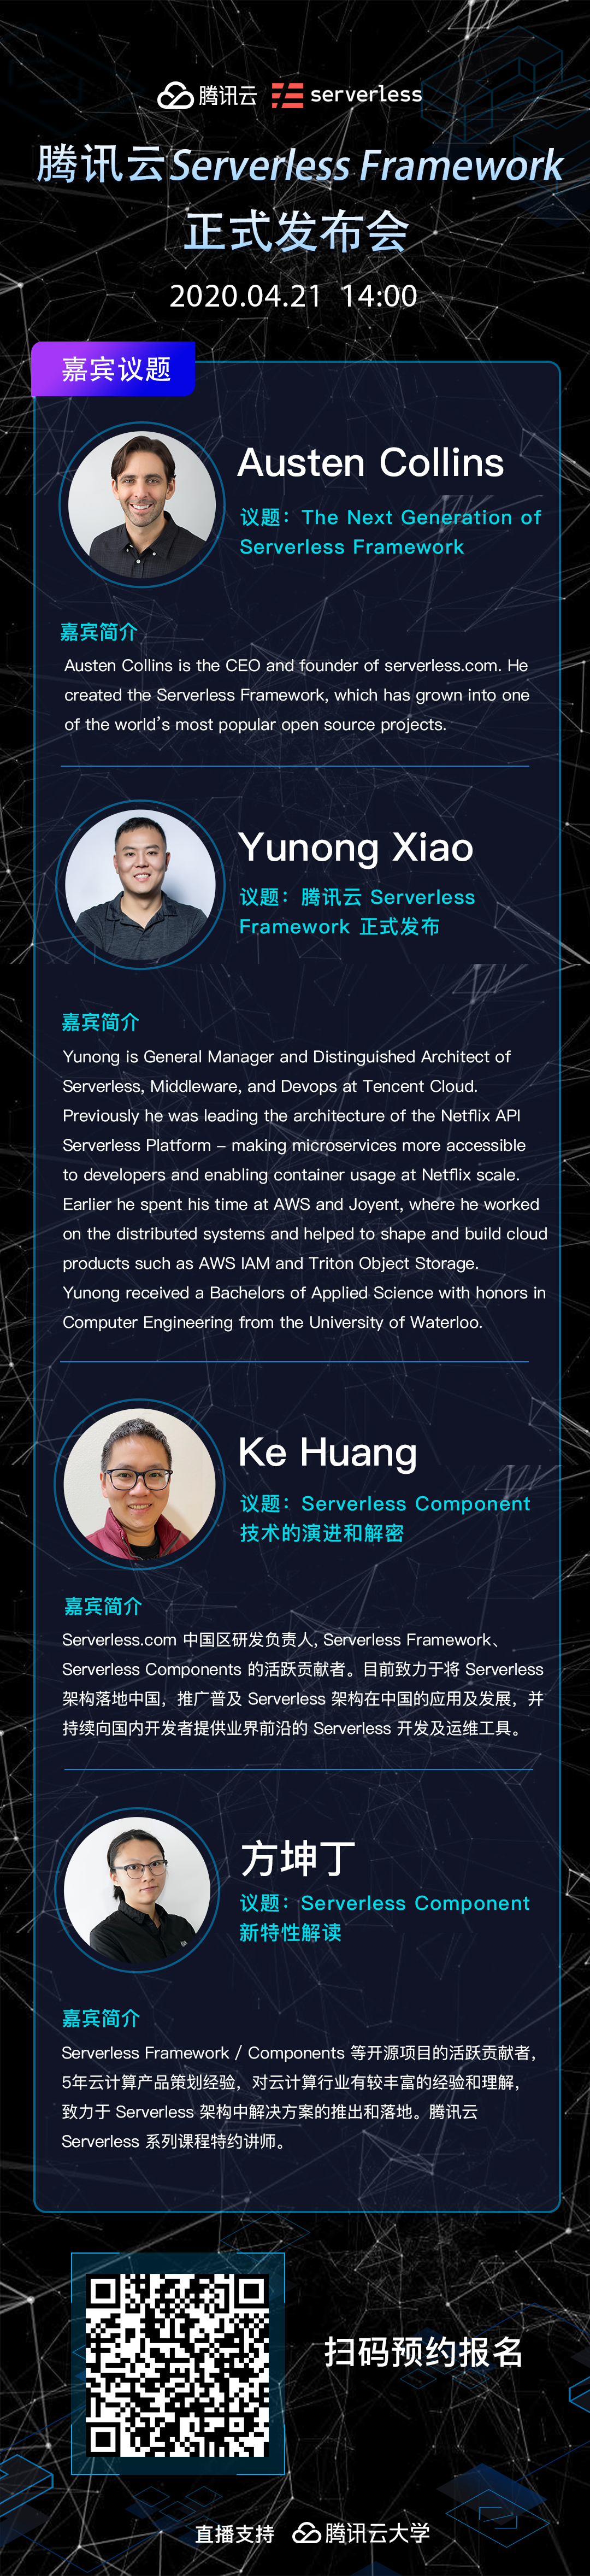 Tencent Cloud Serverless Framework Official Conference